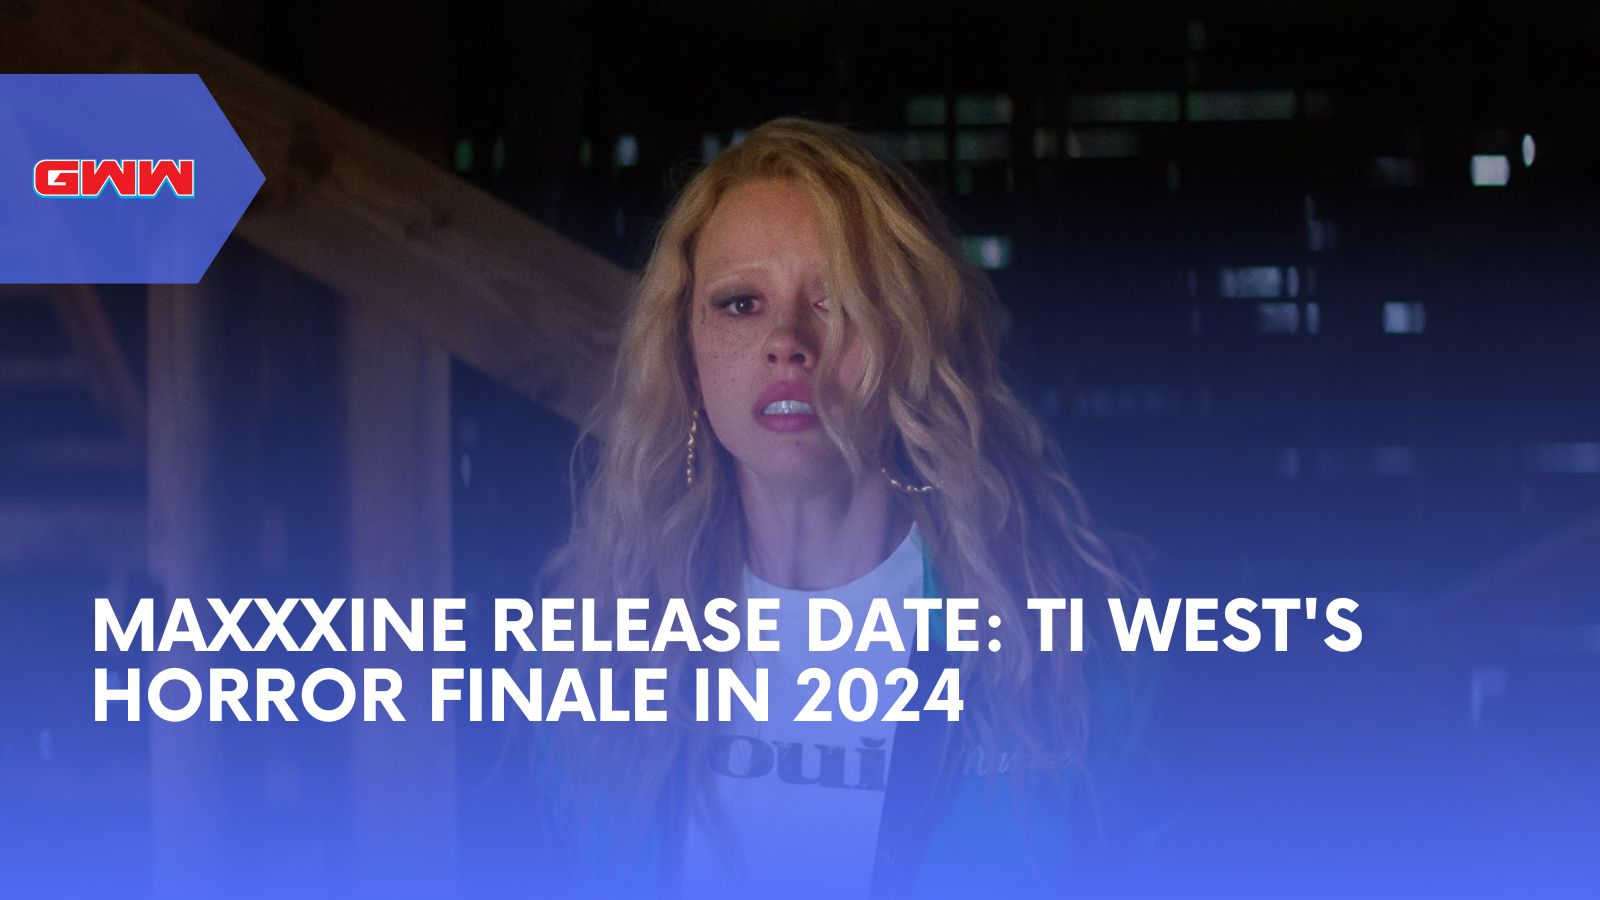 MaXXXine Release Date: Ti West's Horror Finale in 2024